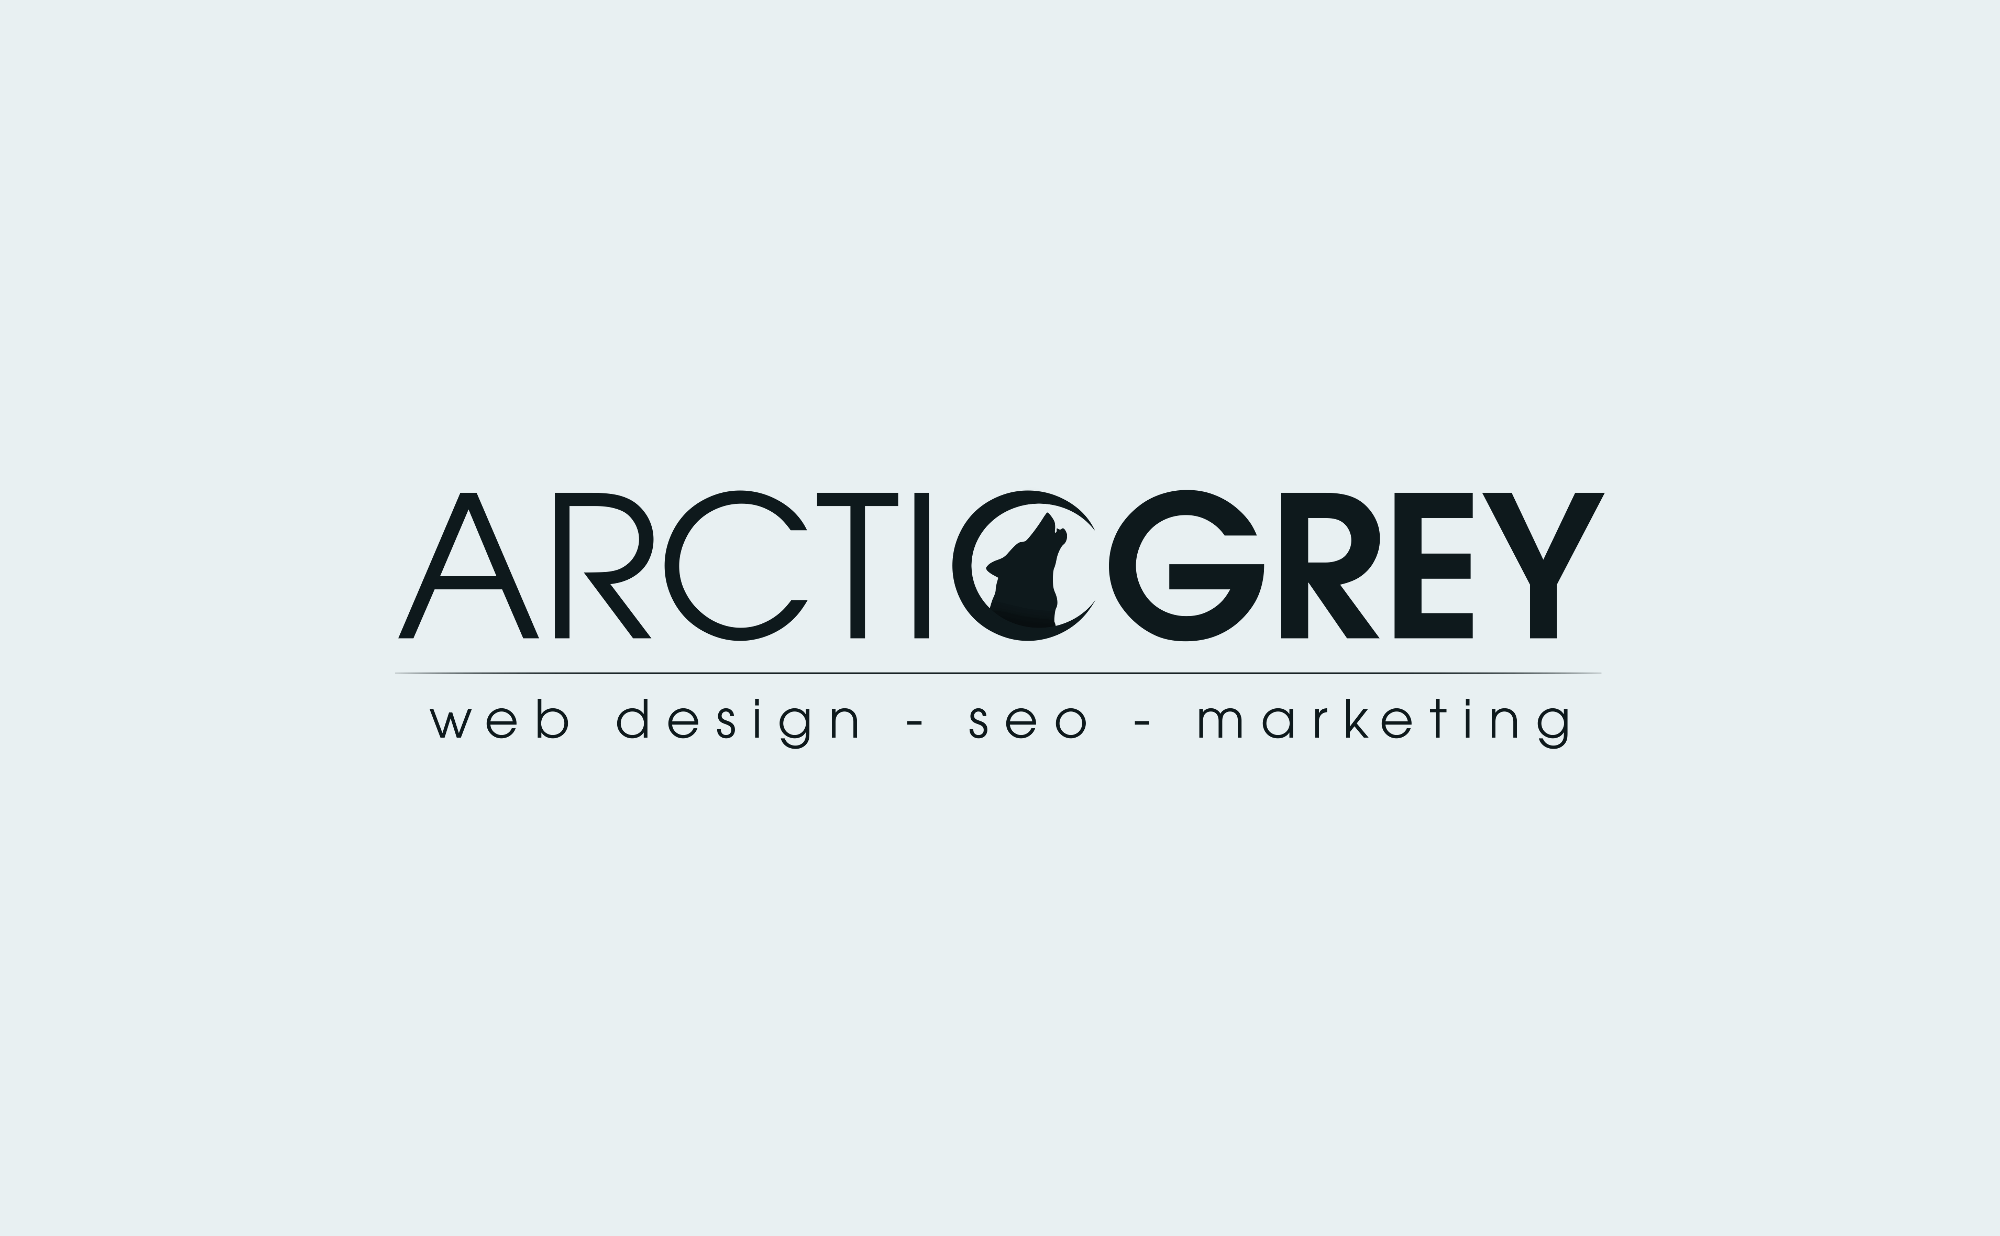 Best SEO Web Development Company Logo: Arctic Grey Inc